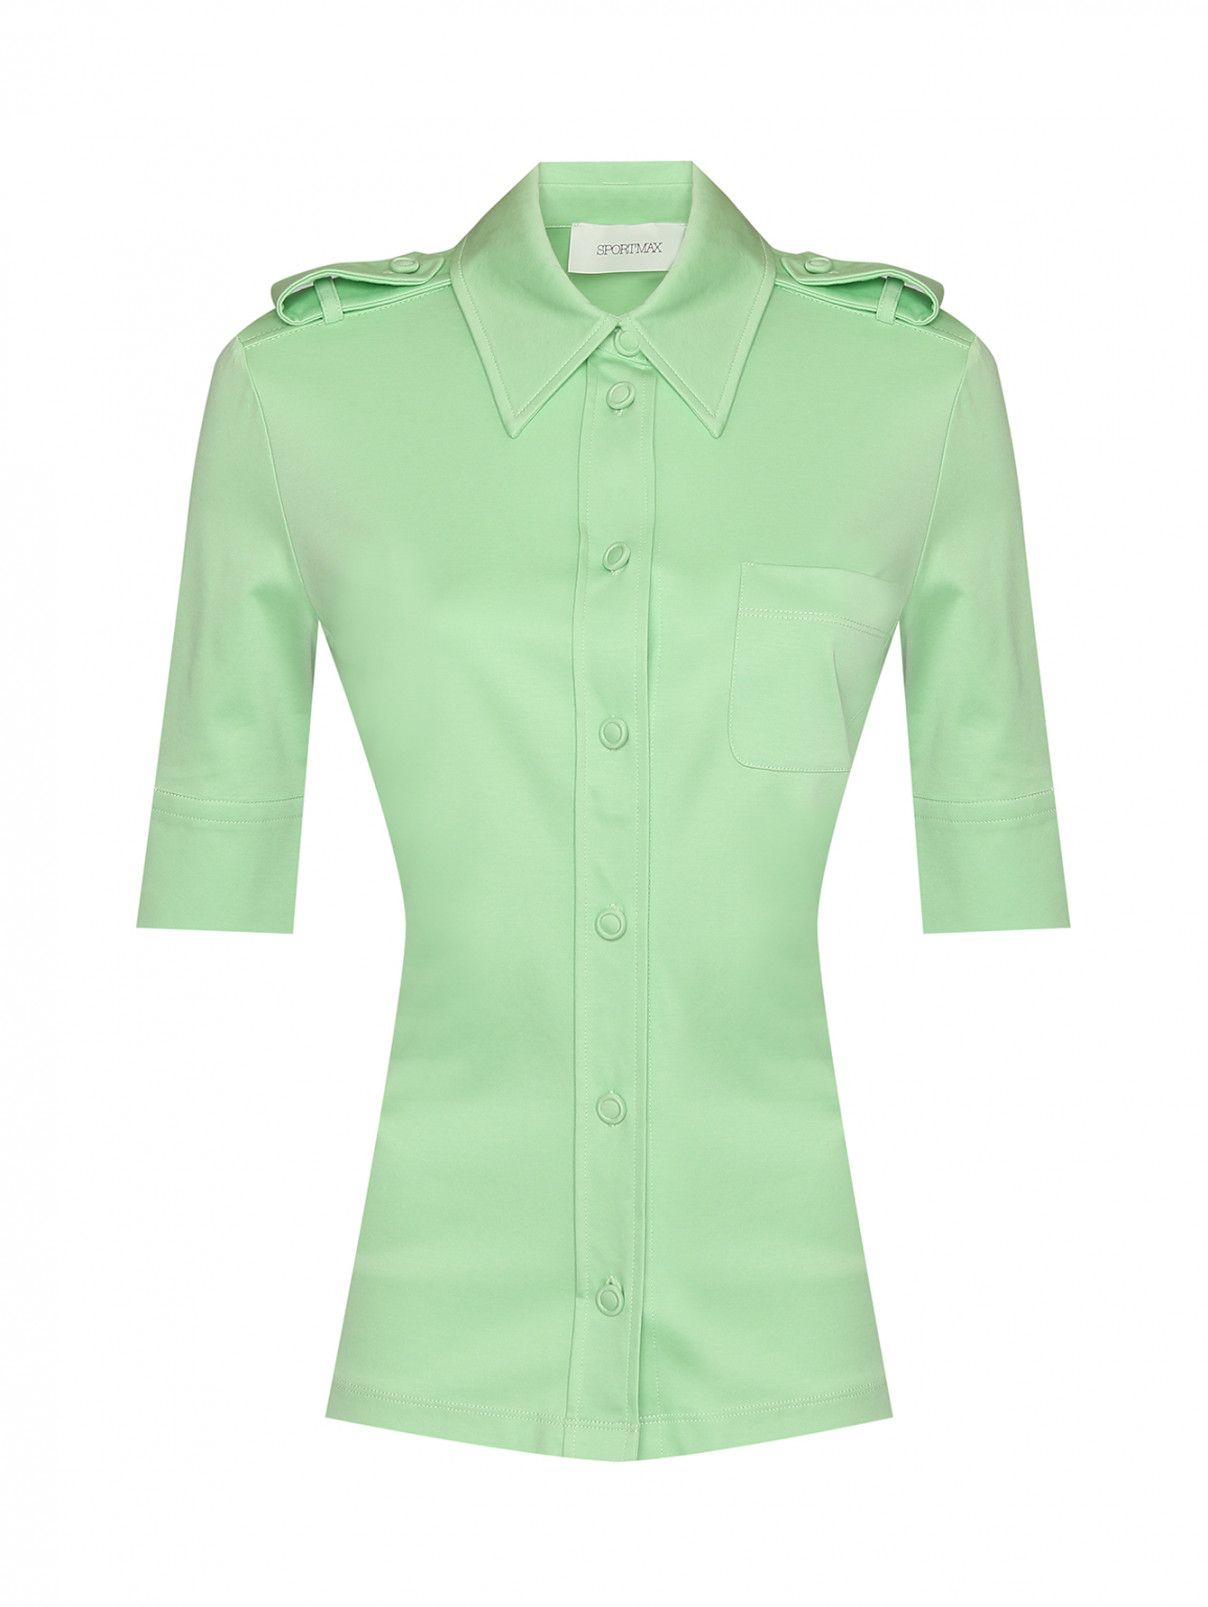 Рубашка с коротким рукавом на пуговицах Sportmax  –  Общий вид  – Цвет:  Зеленый